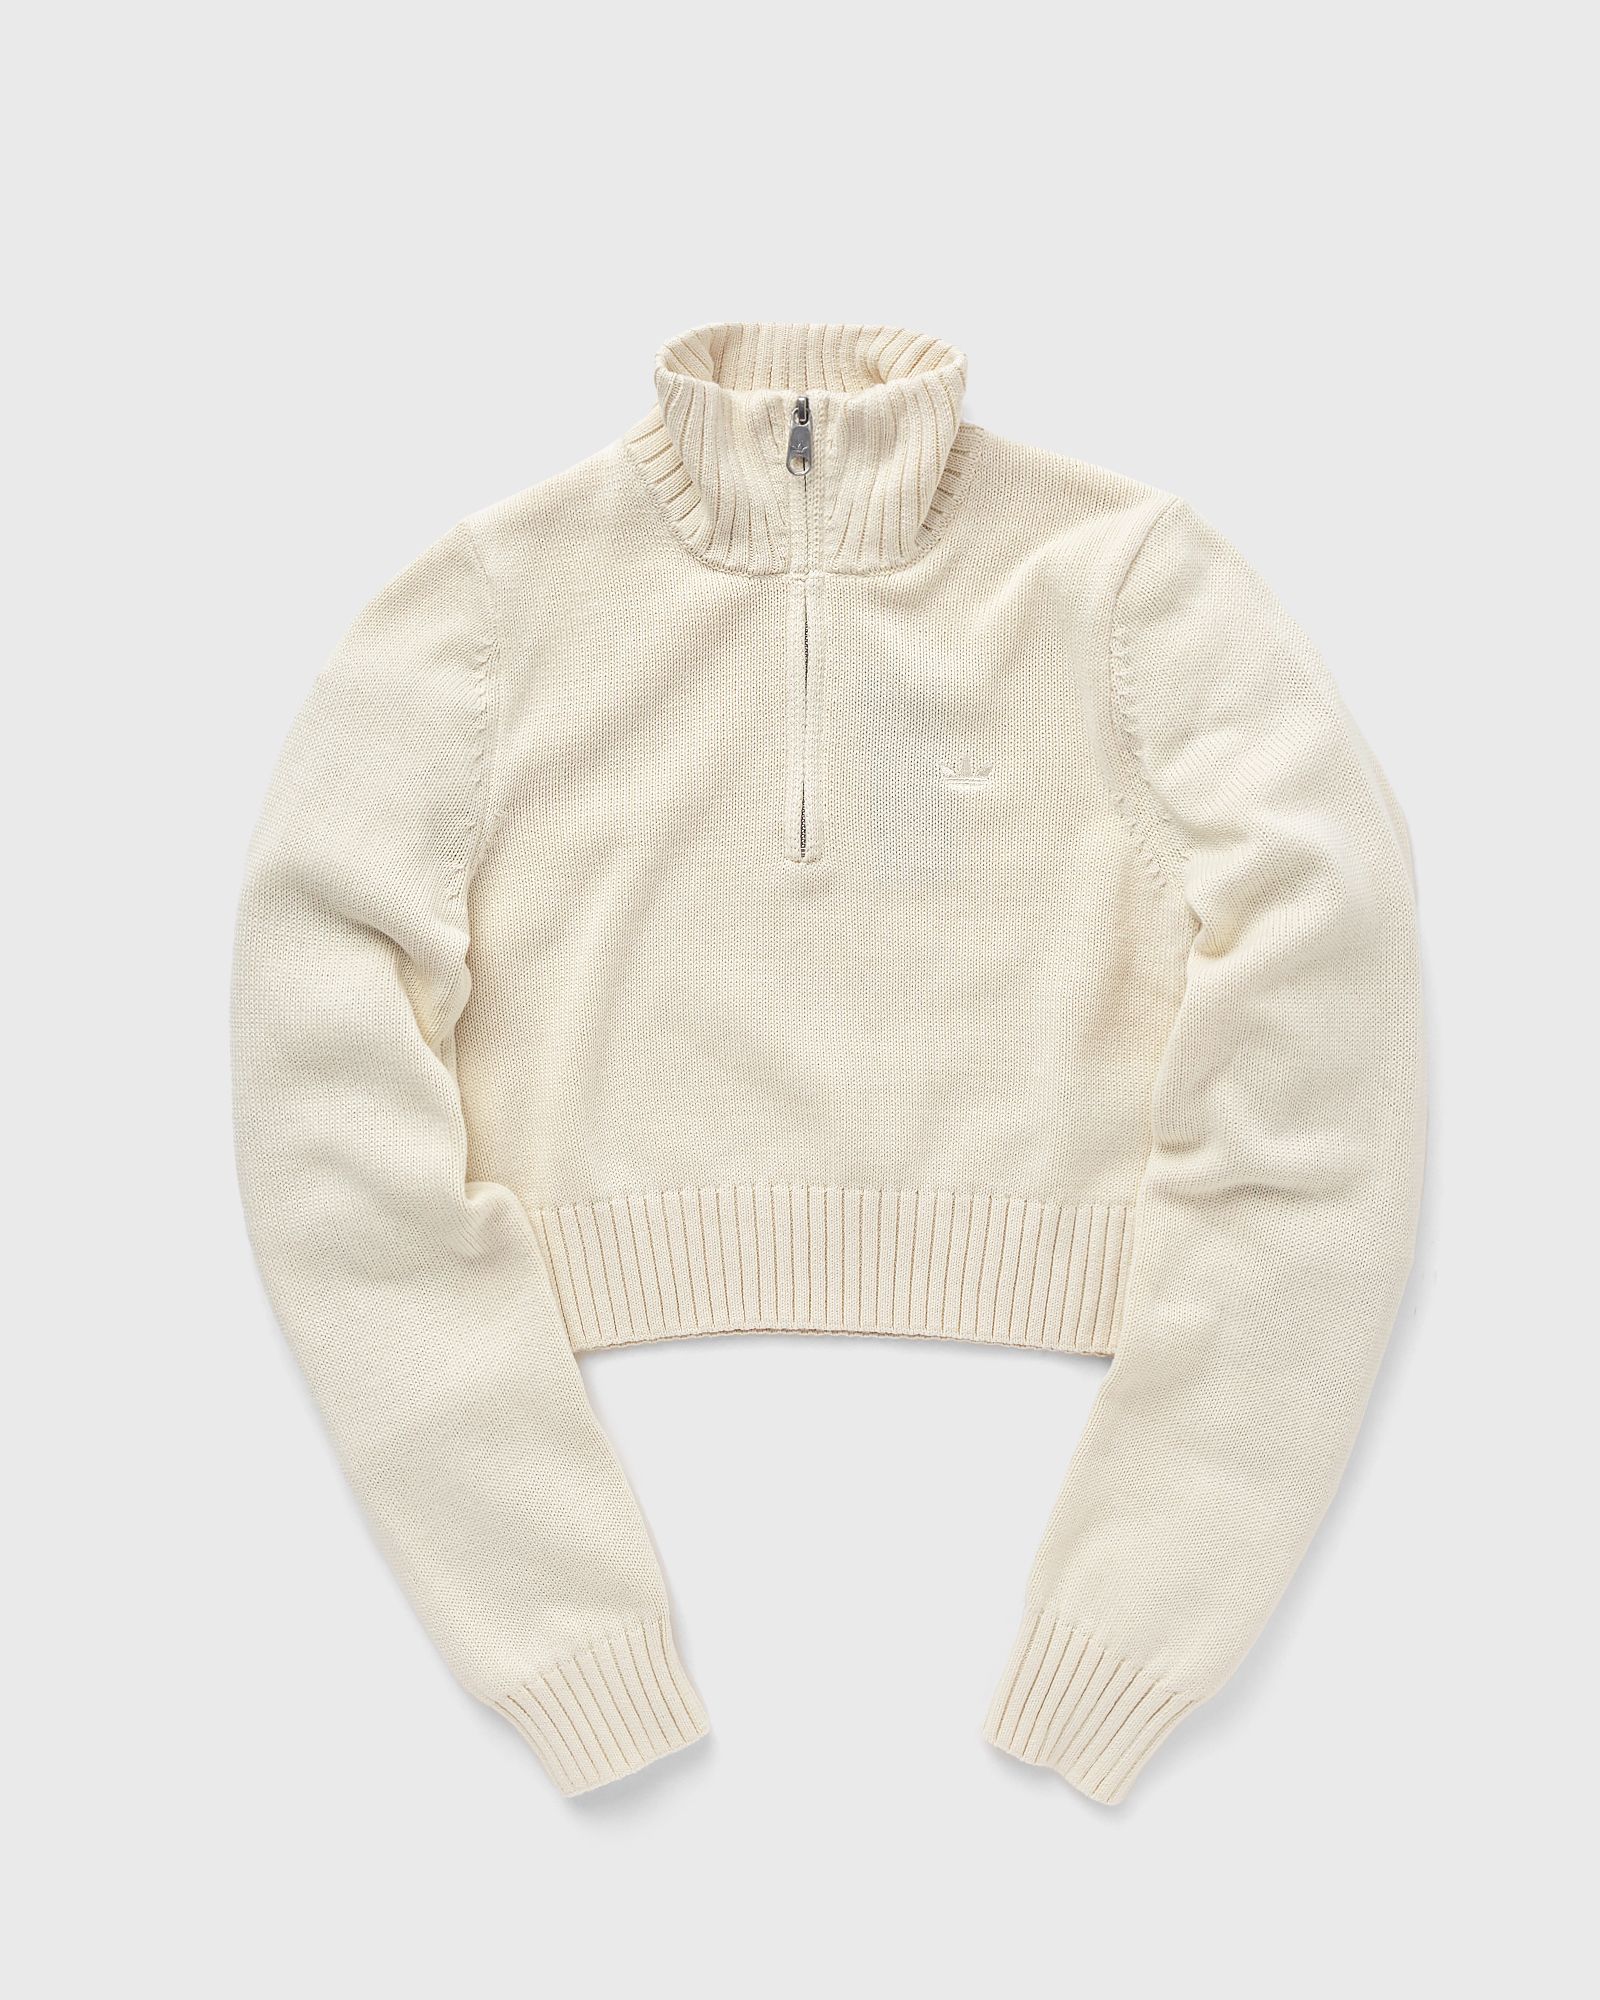 Adidas - wmns knit half zip women pullovers|zippers & cardigans beige in größe:s